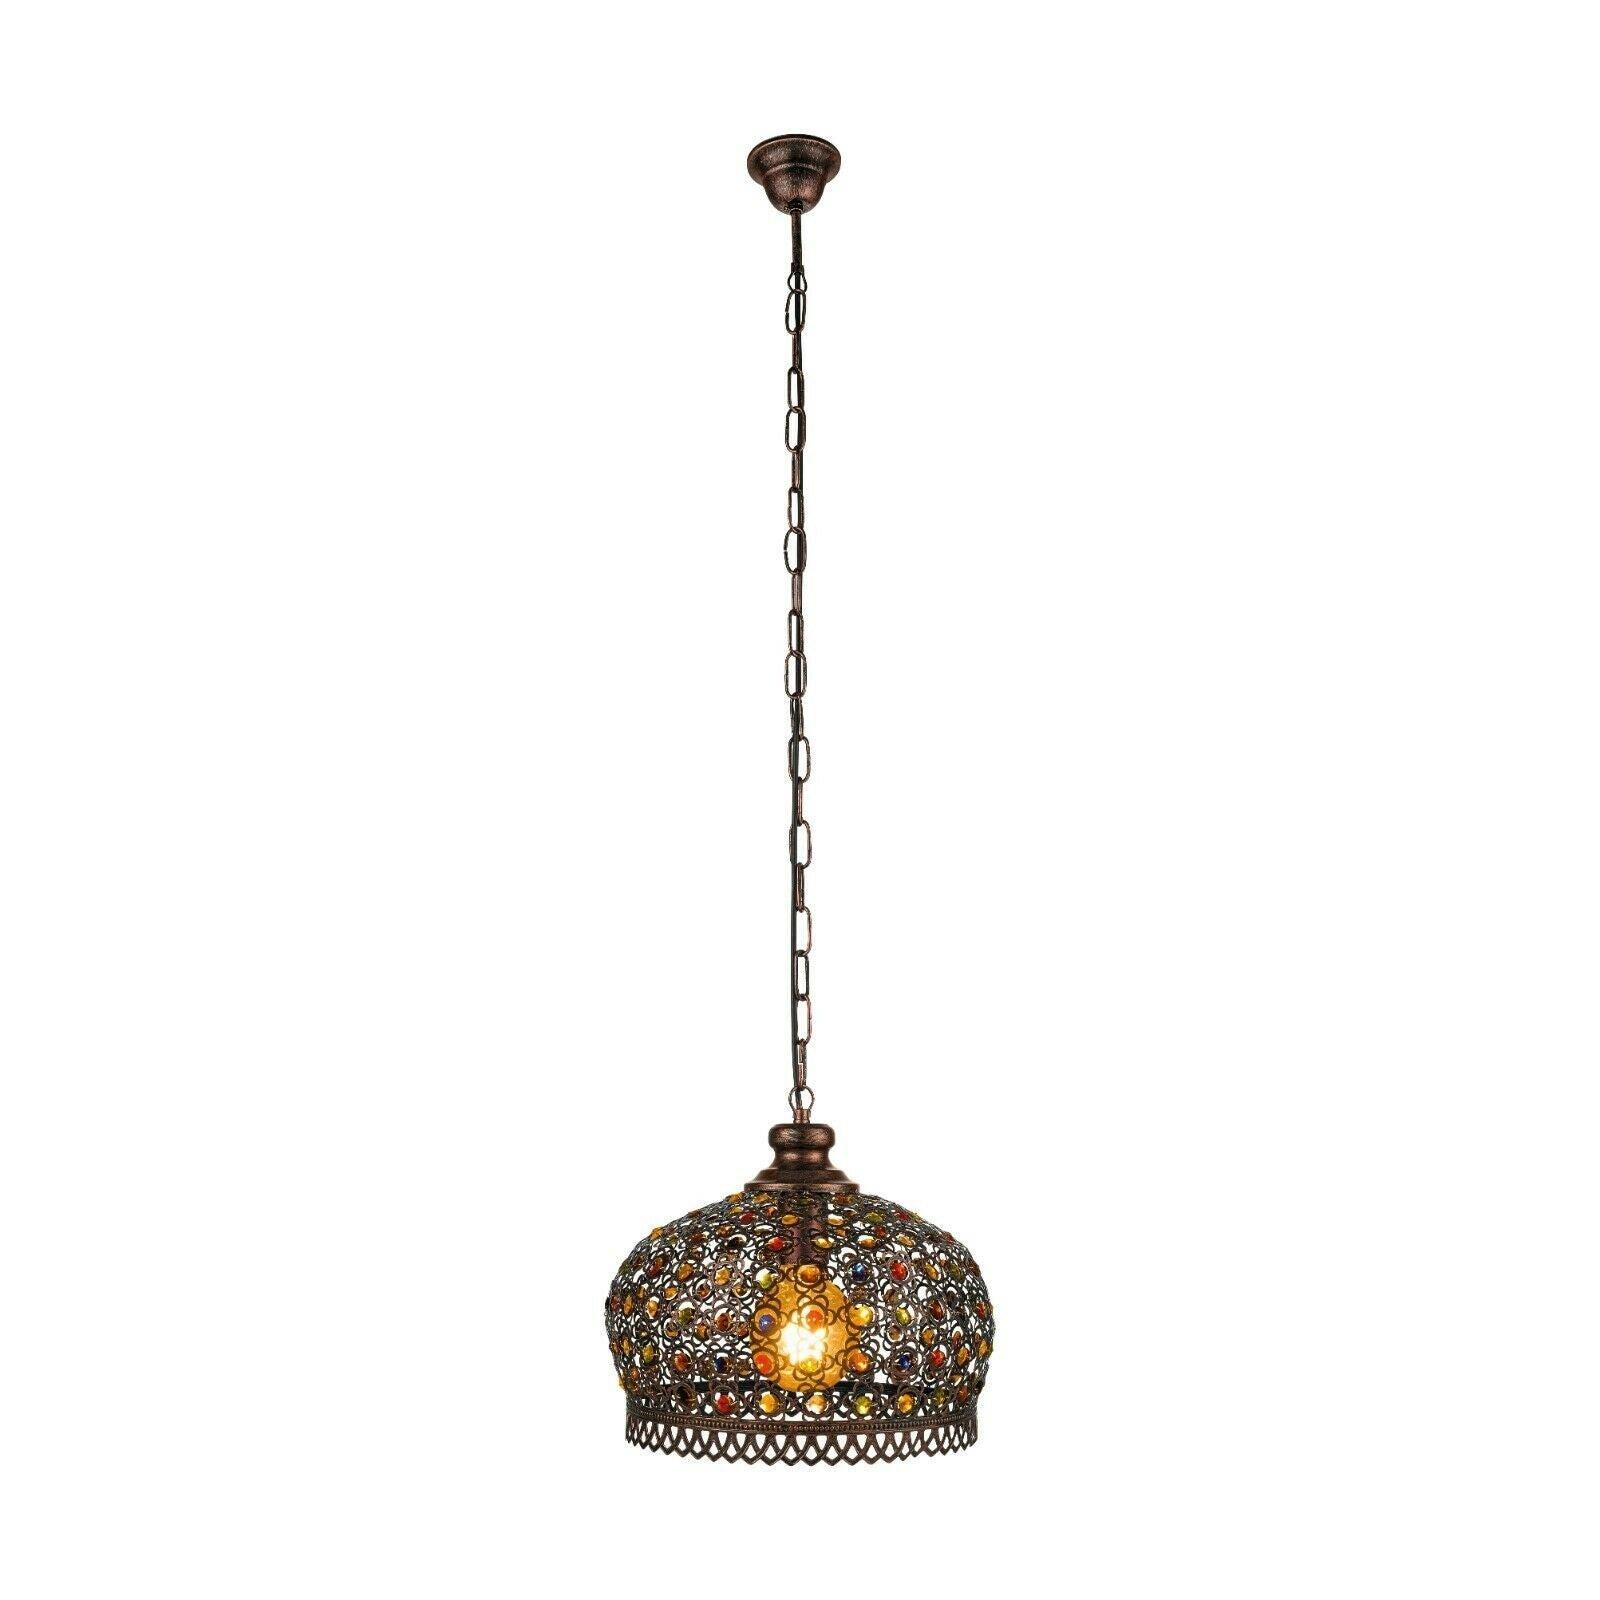 Hanging Ceiling Pendant Light Antique Copper & Coloured Glass 1 x 60W E27 Bulb